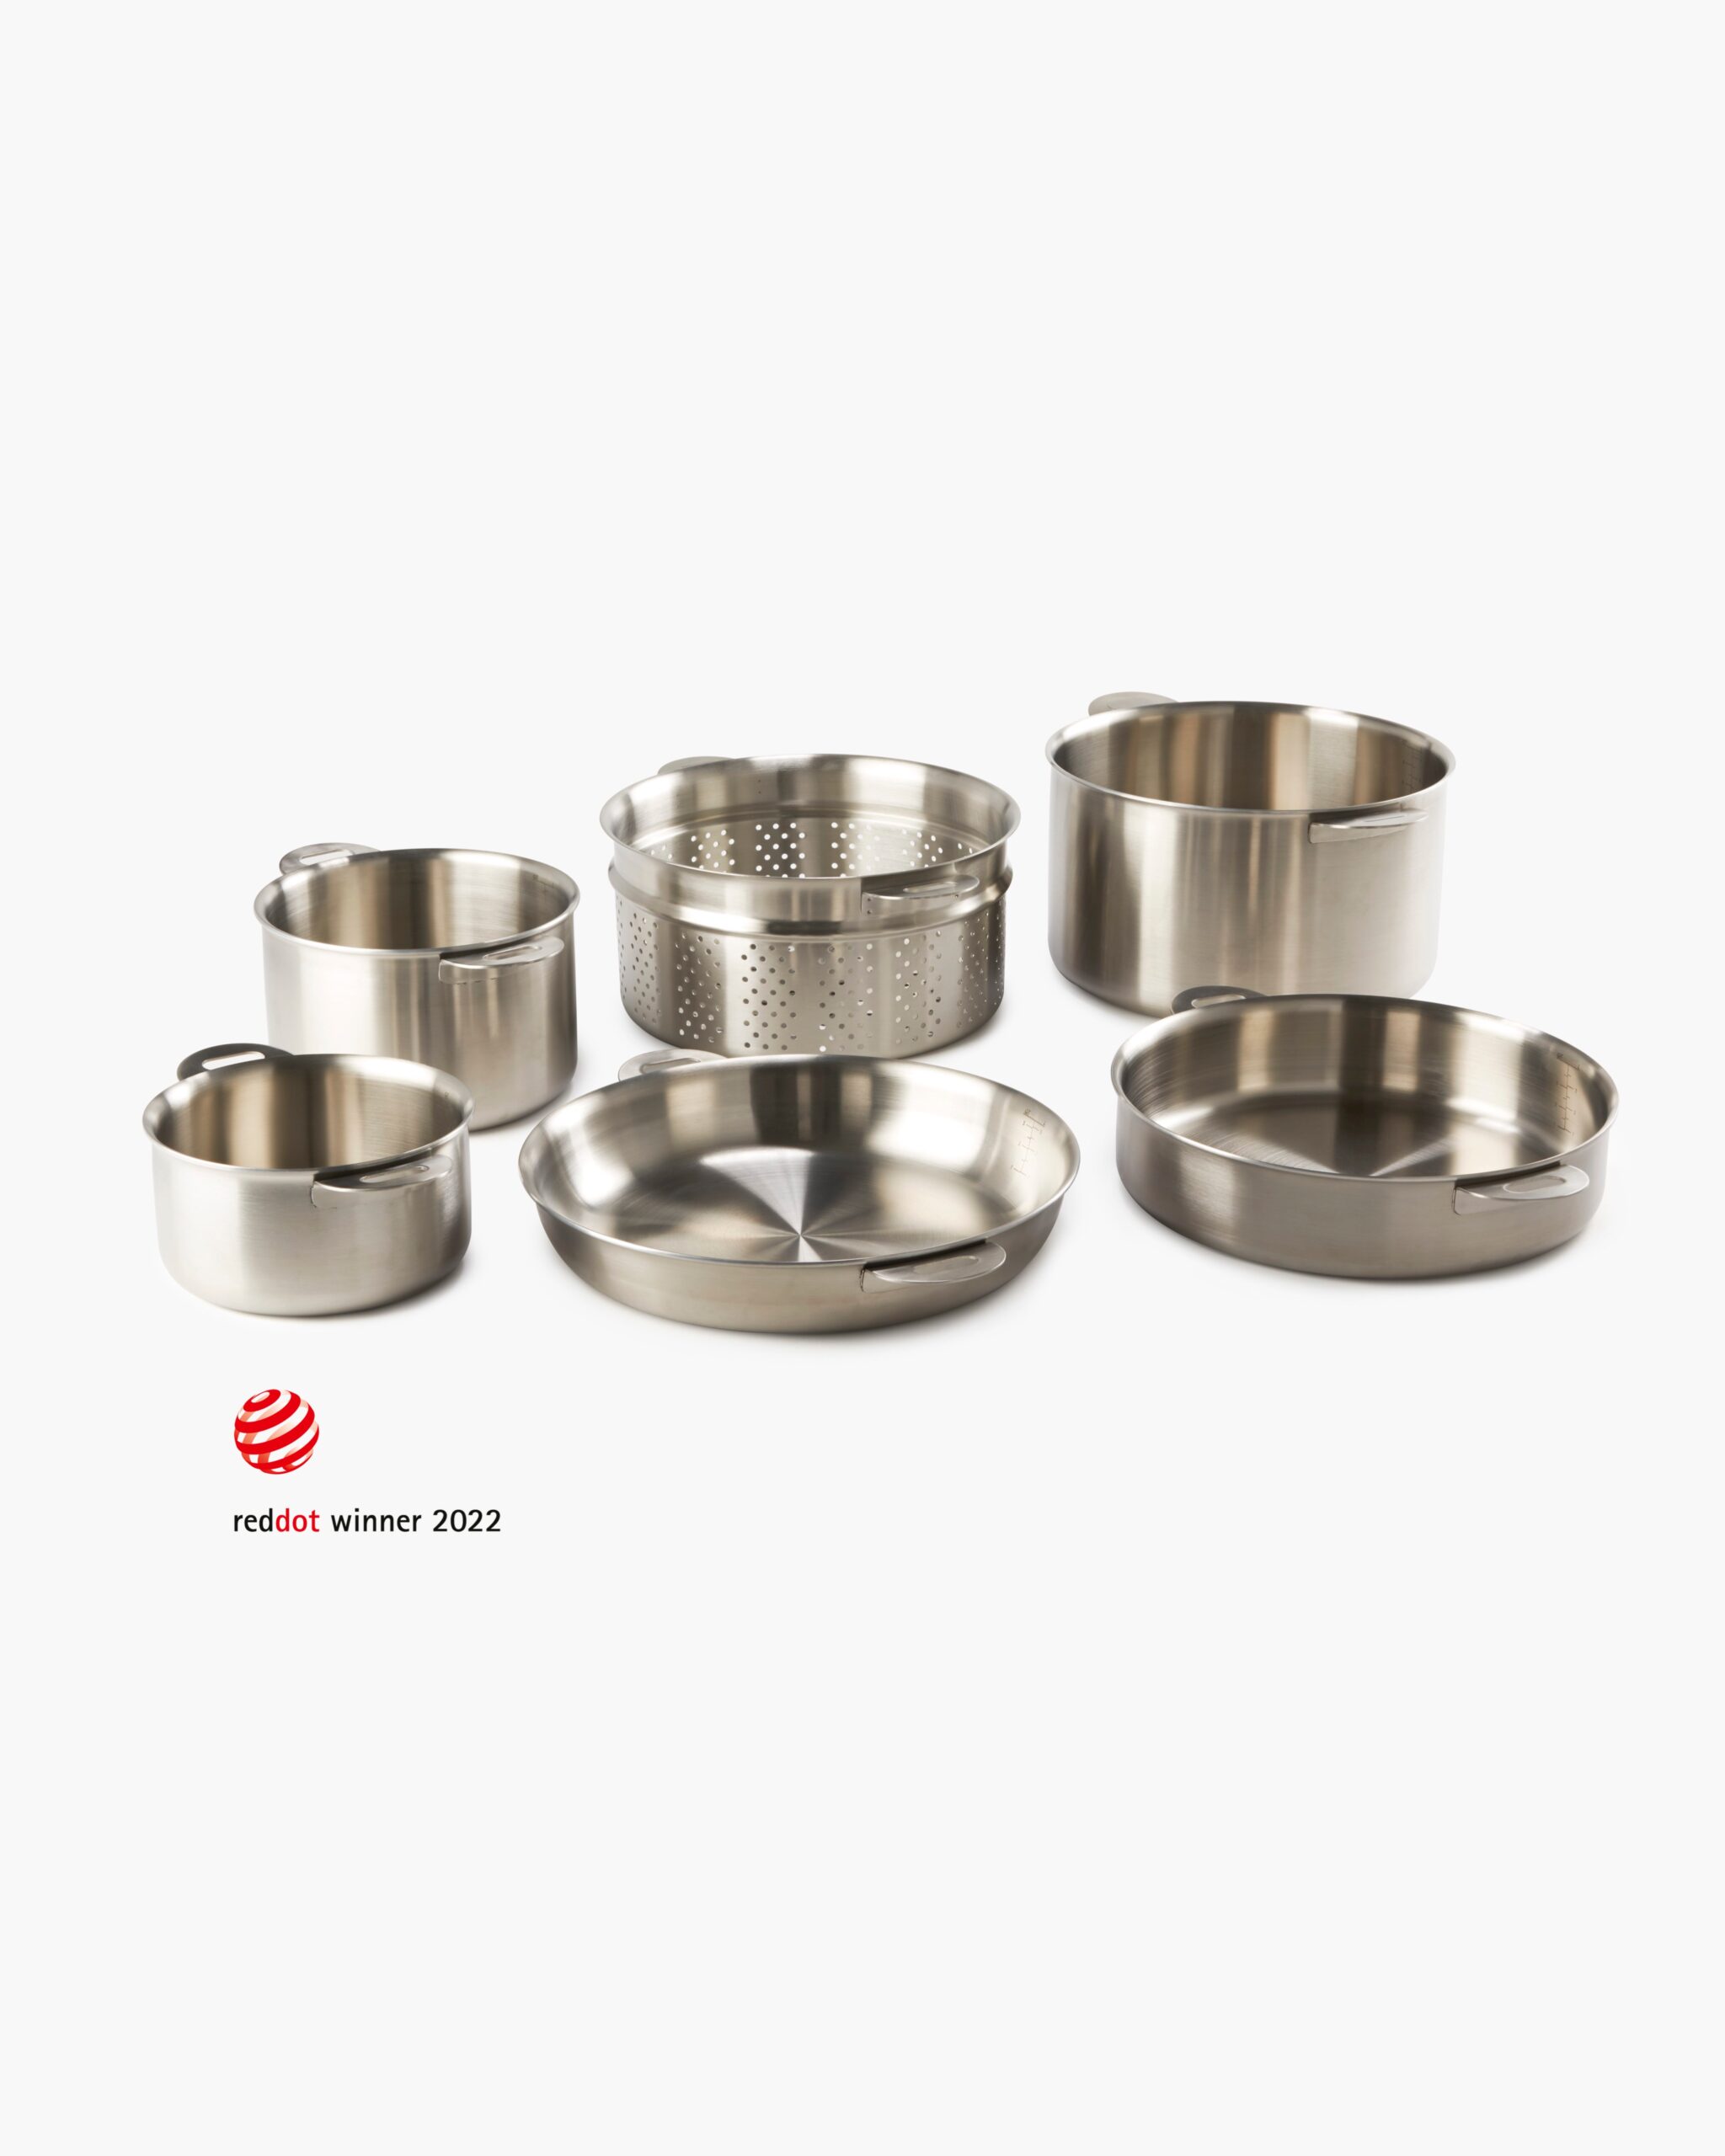 ENSEMBL Stackware Full6 Cookware Stainless Steel Red Dot Design Award Winning.